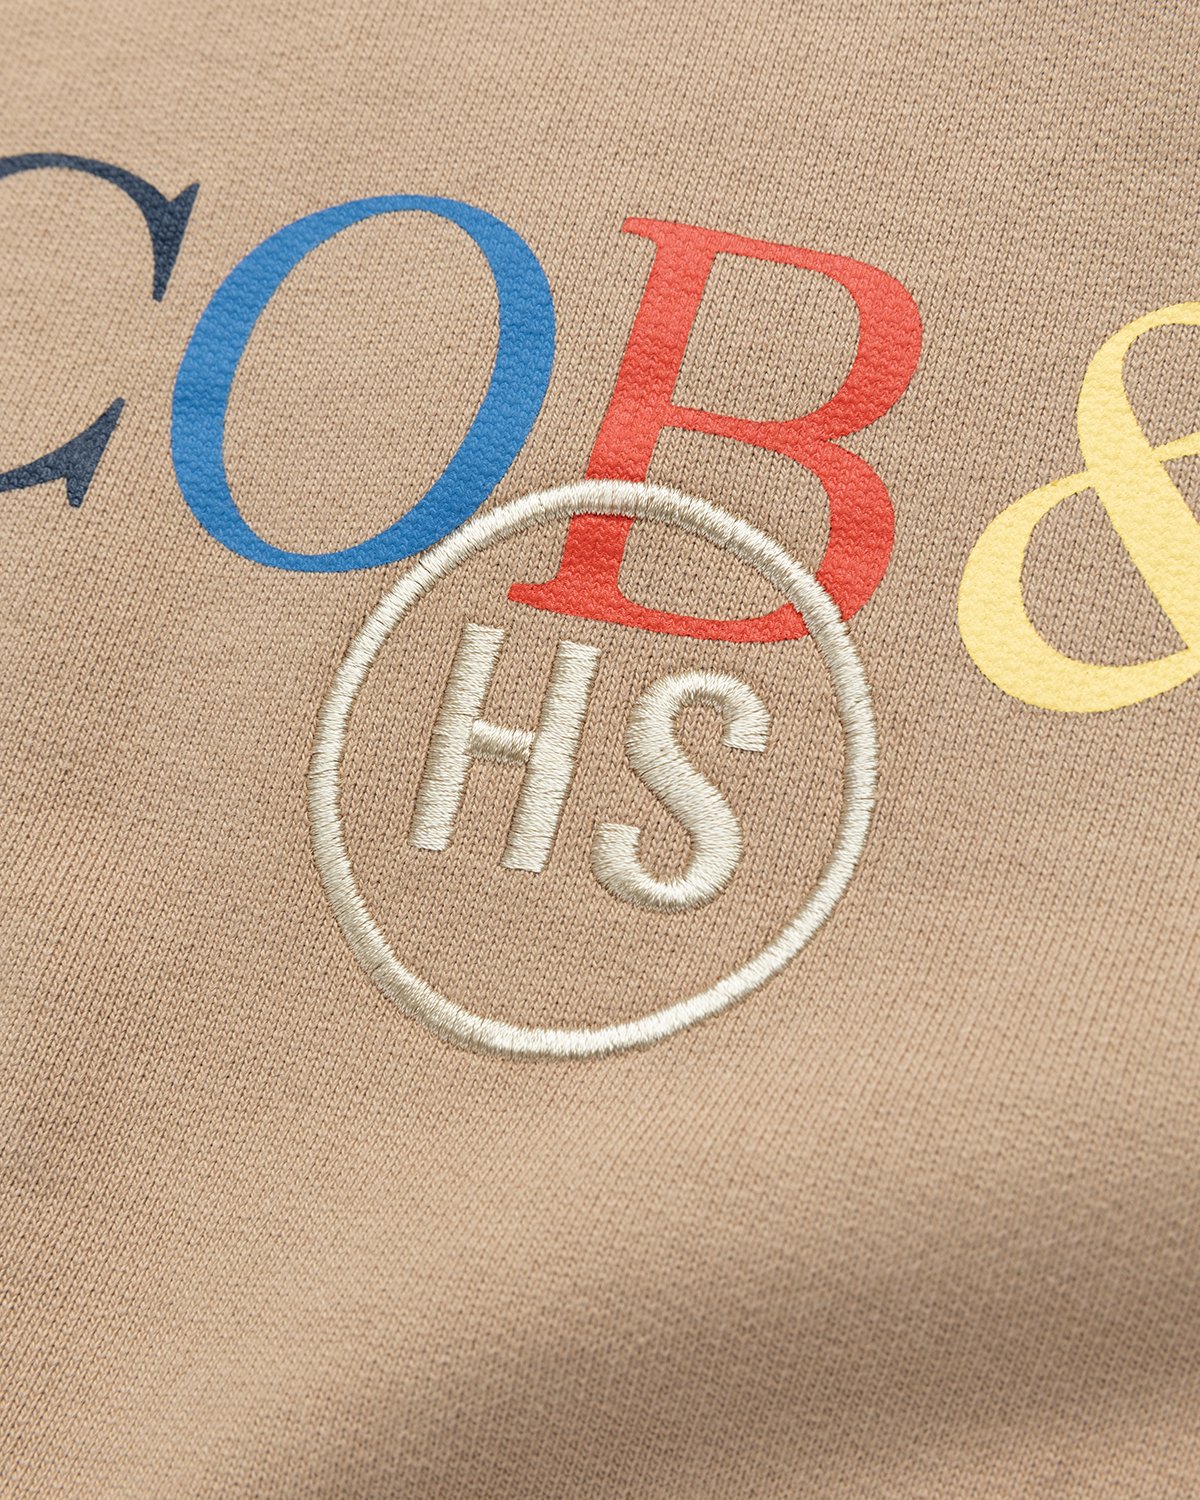 Jacob & Co. x Highsnobiety - Multicolor Logo Fleece Hoodie Brown - Clothing - Brown - Image 3